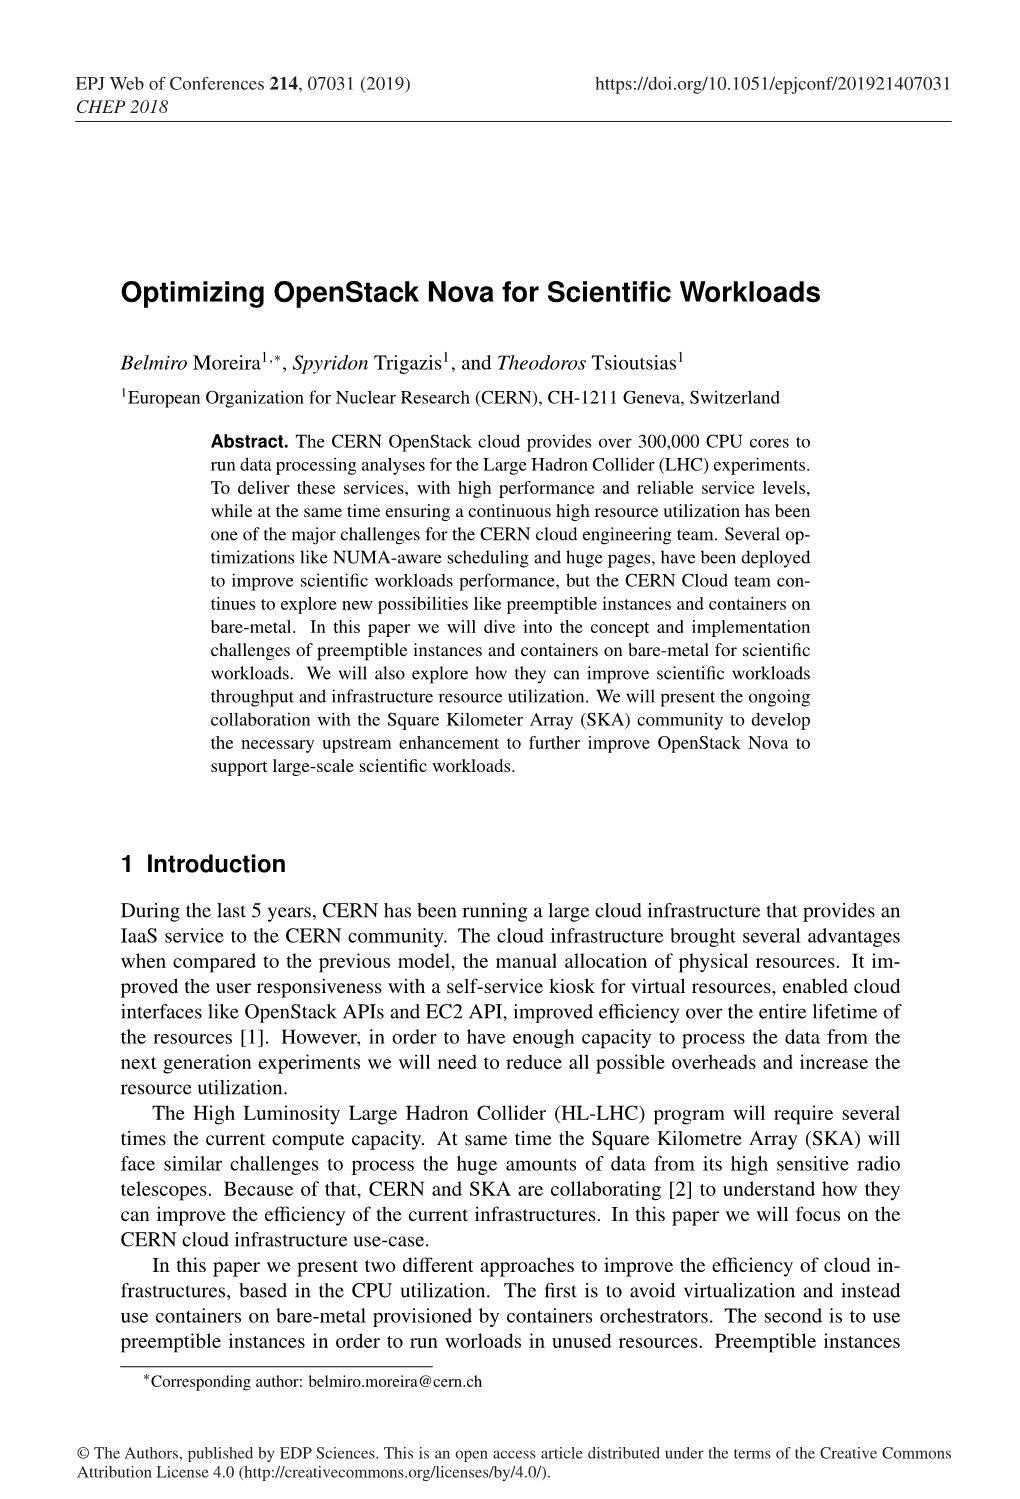 Optimizing Openstack Nova for Scientific Workloads